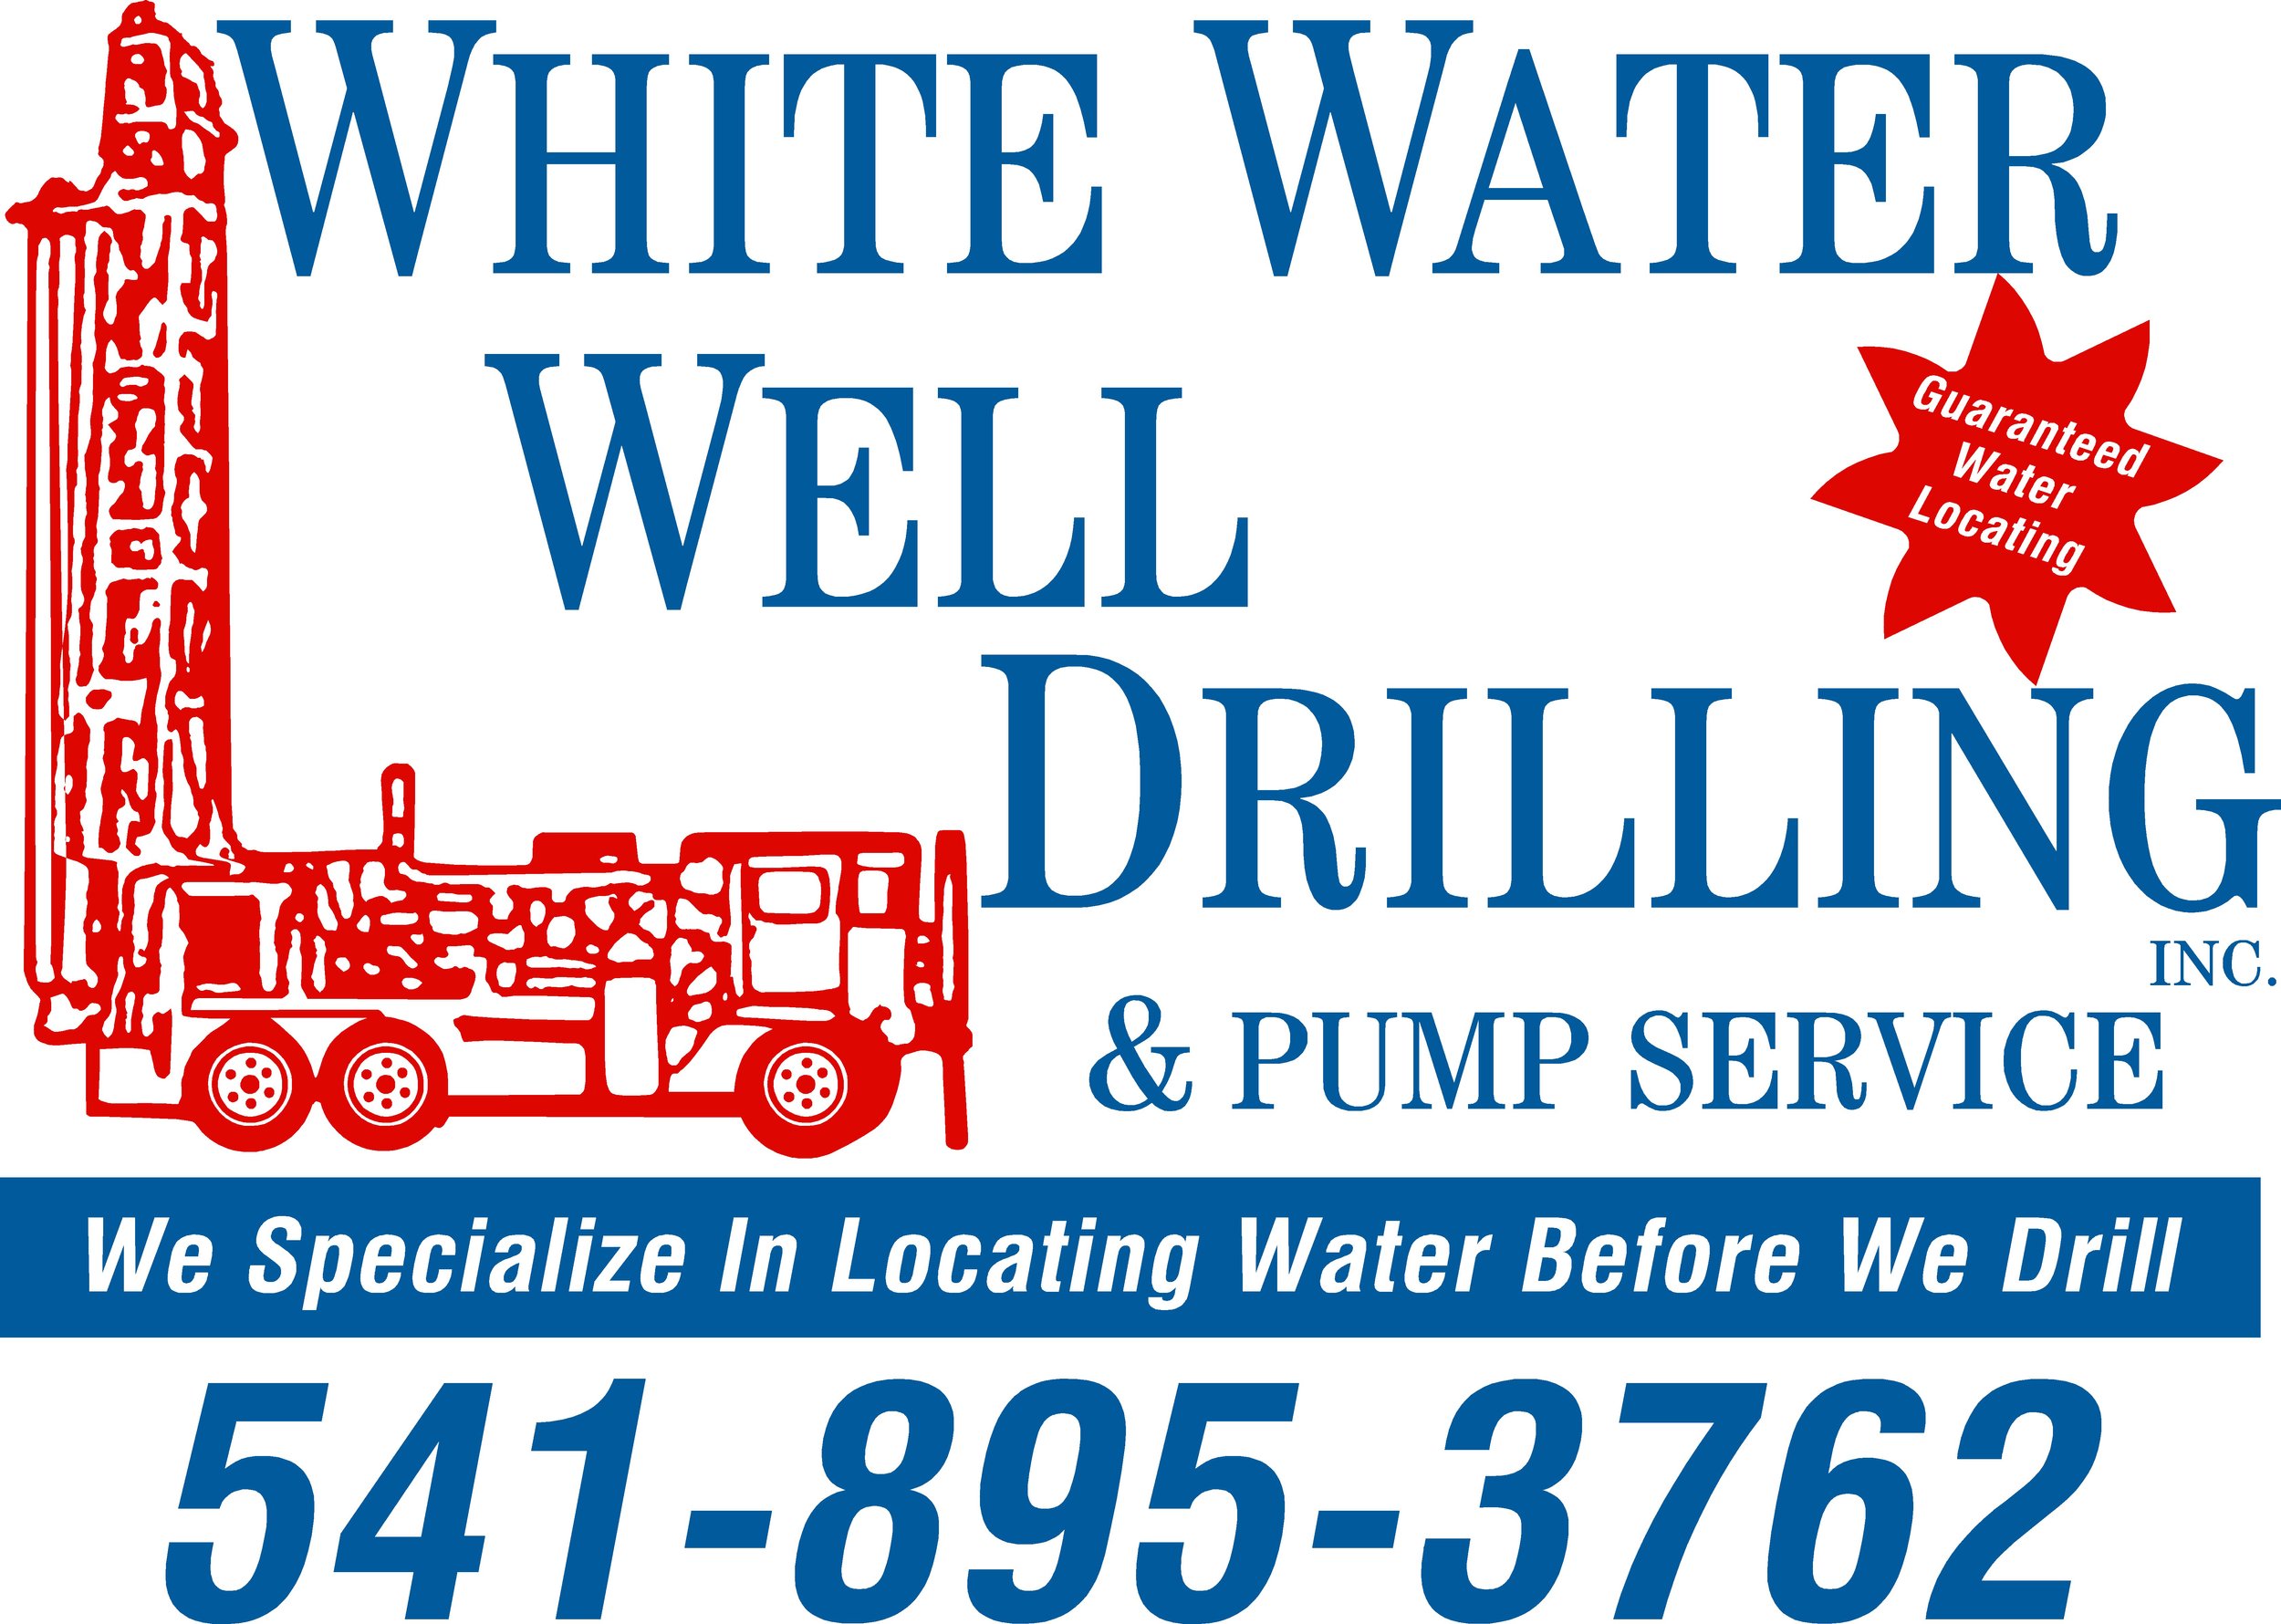 white water well drilling.jpg